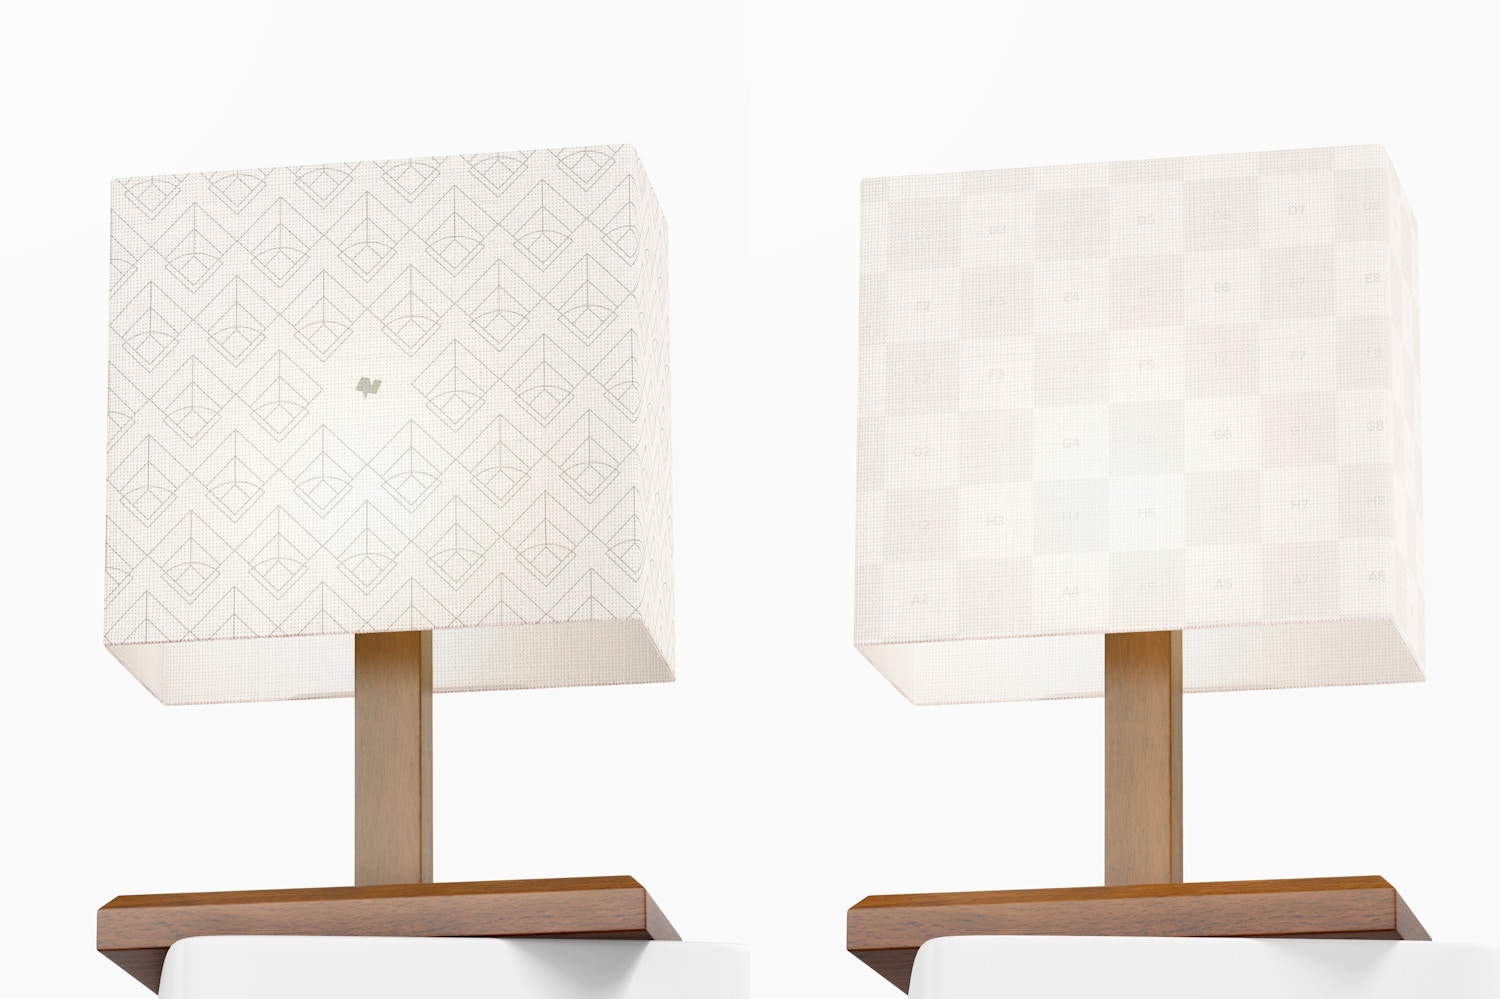 Rectangular Wood Table Lamp Mockup, Low Angle View